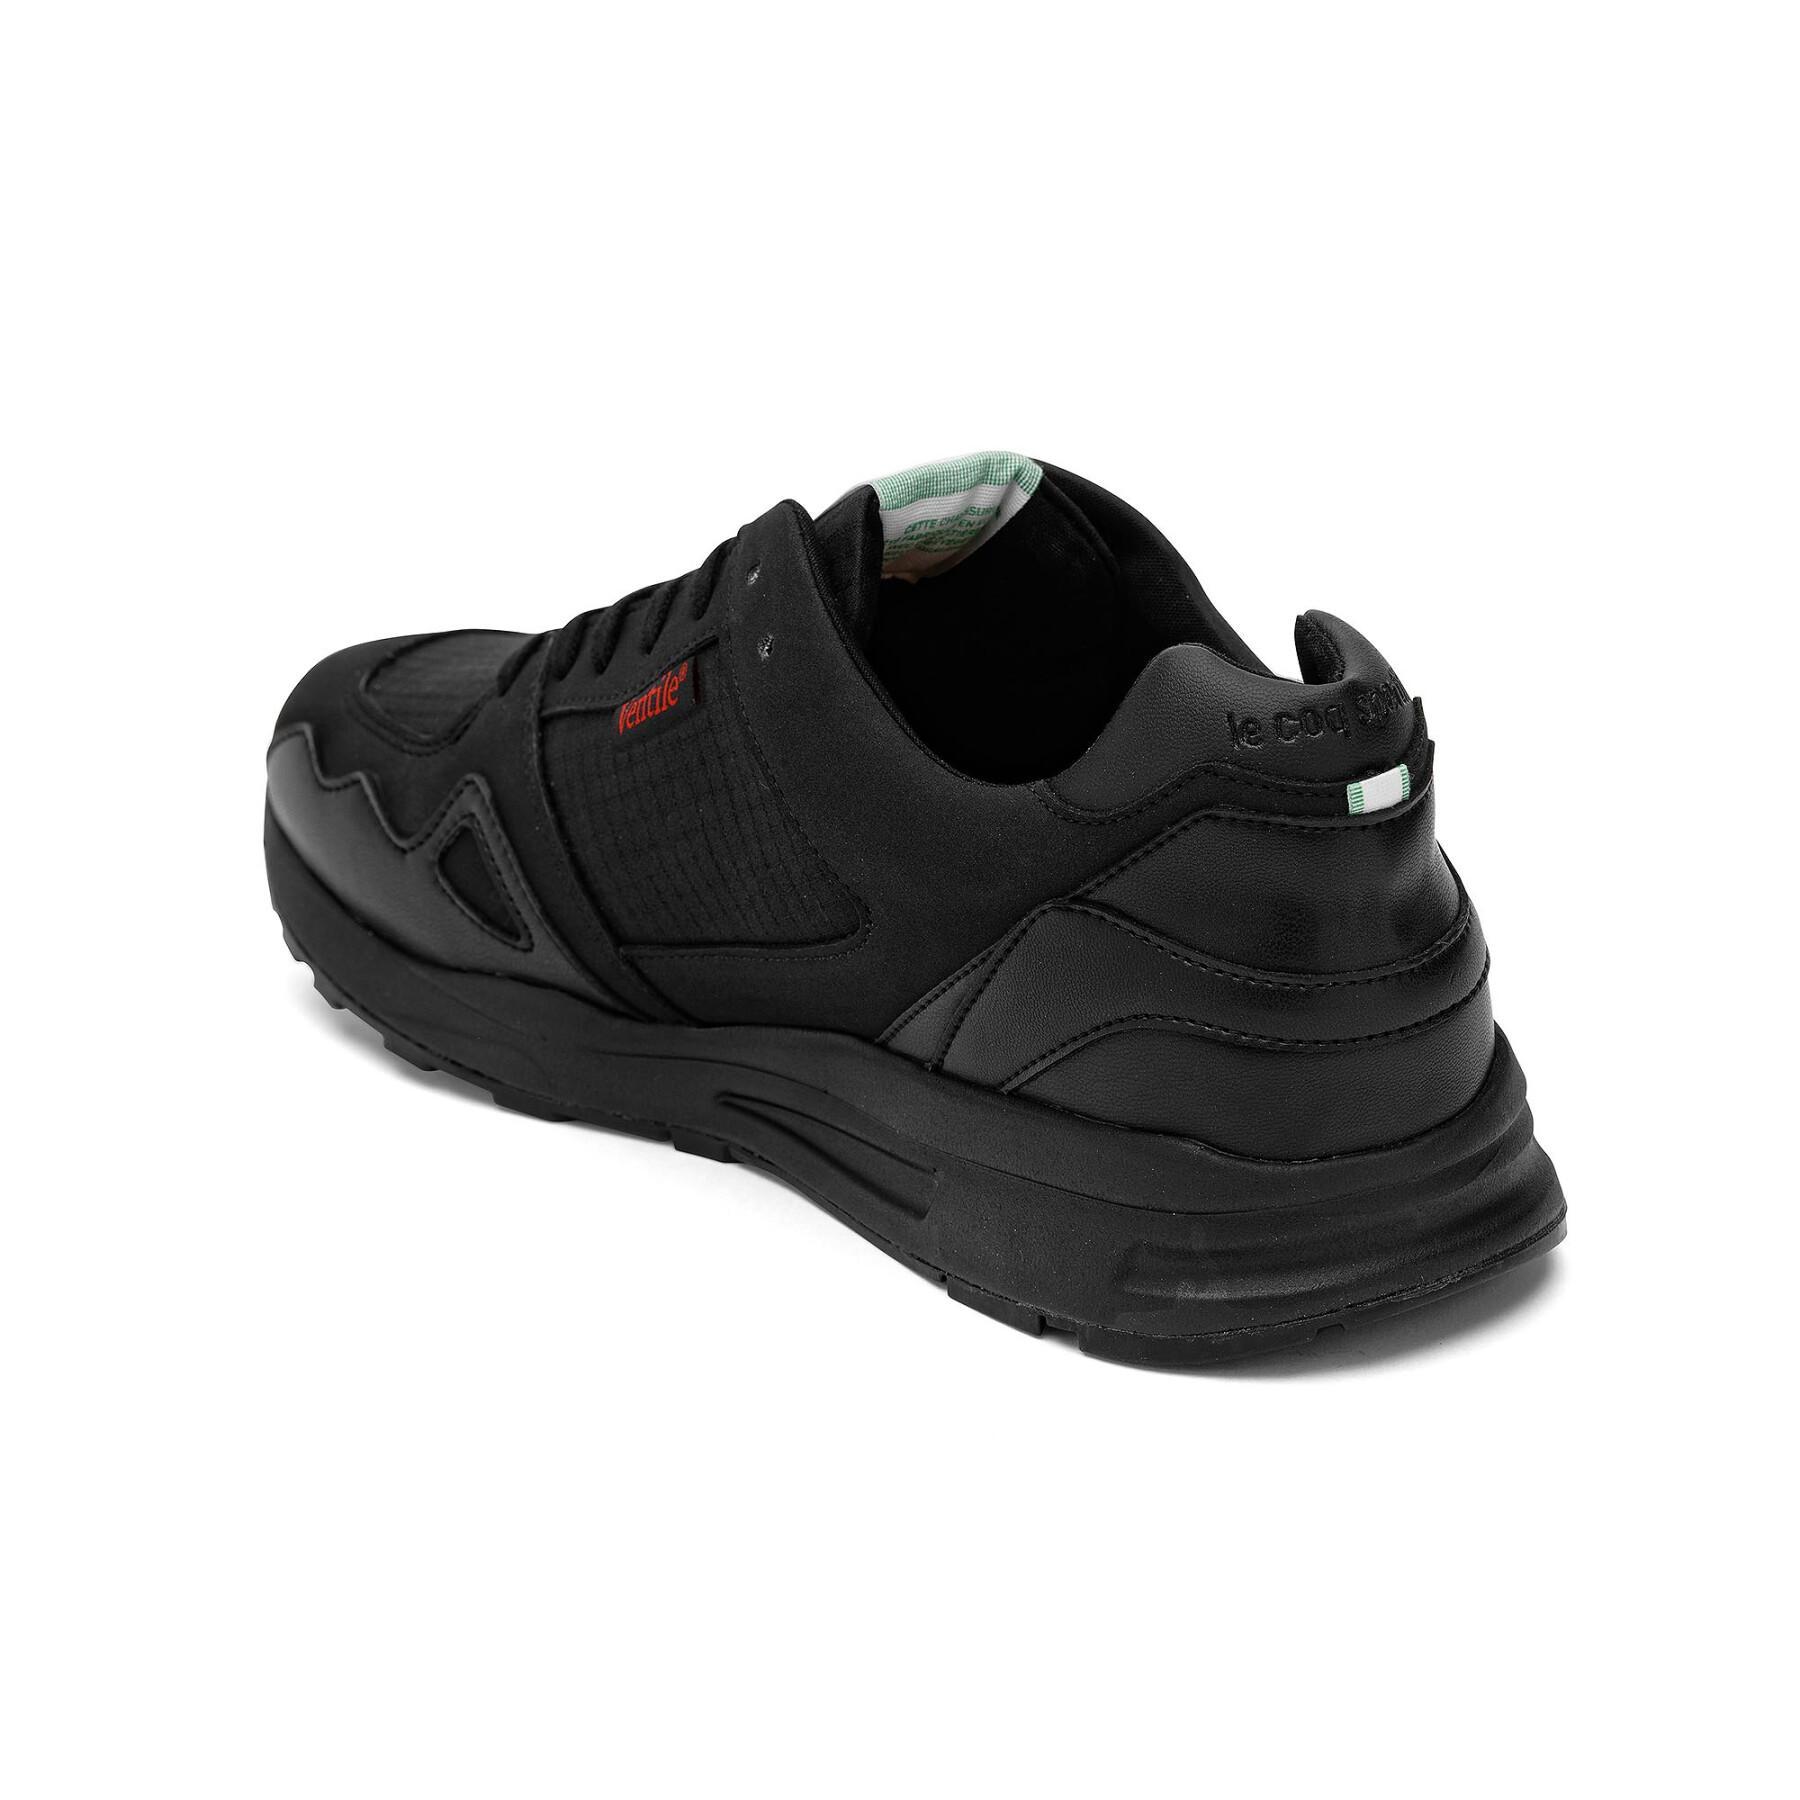 Sneakers Le Coq Sportif LCS R100 VG Ventile Triple Black